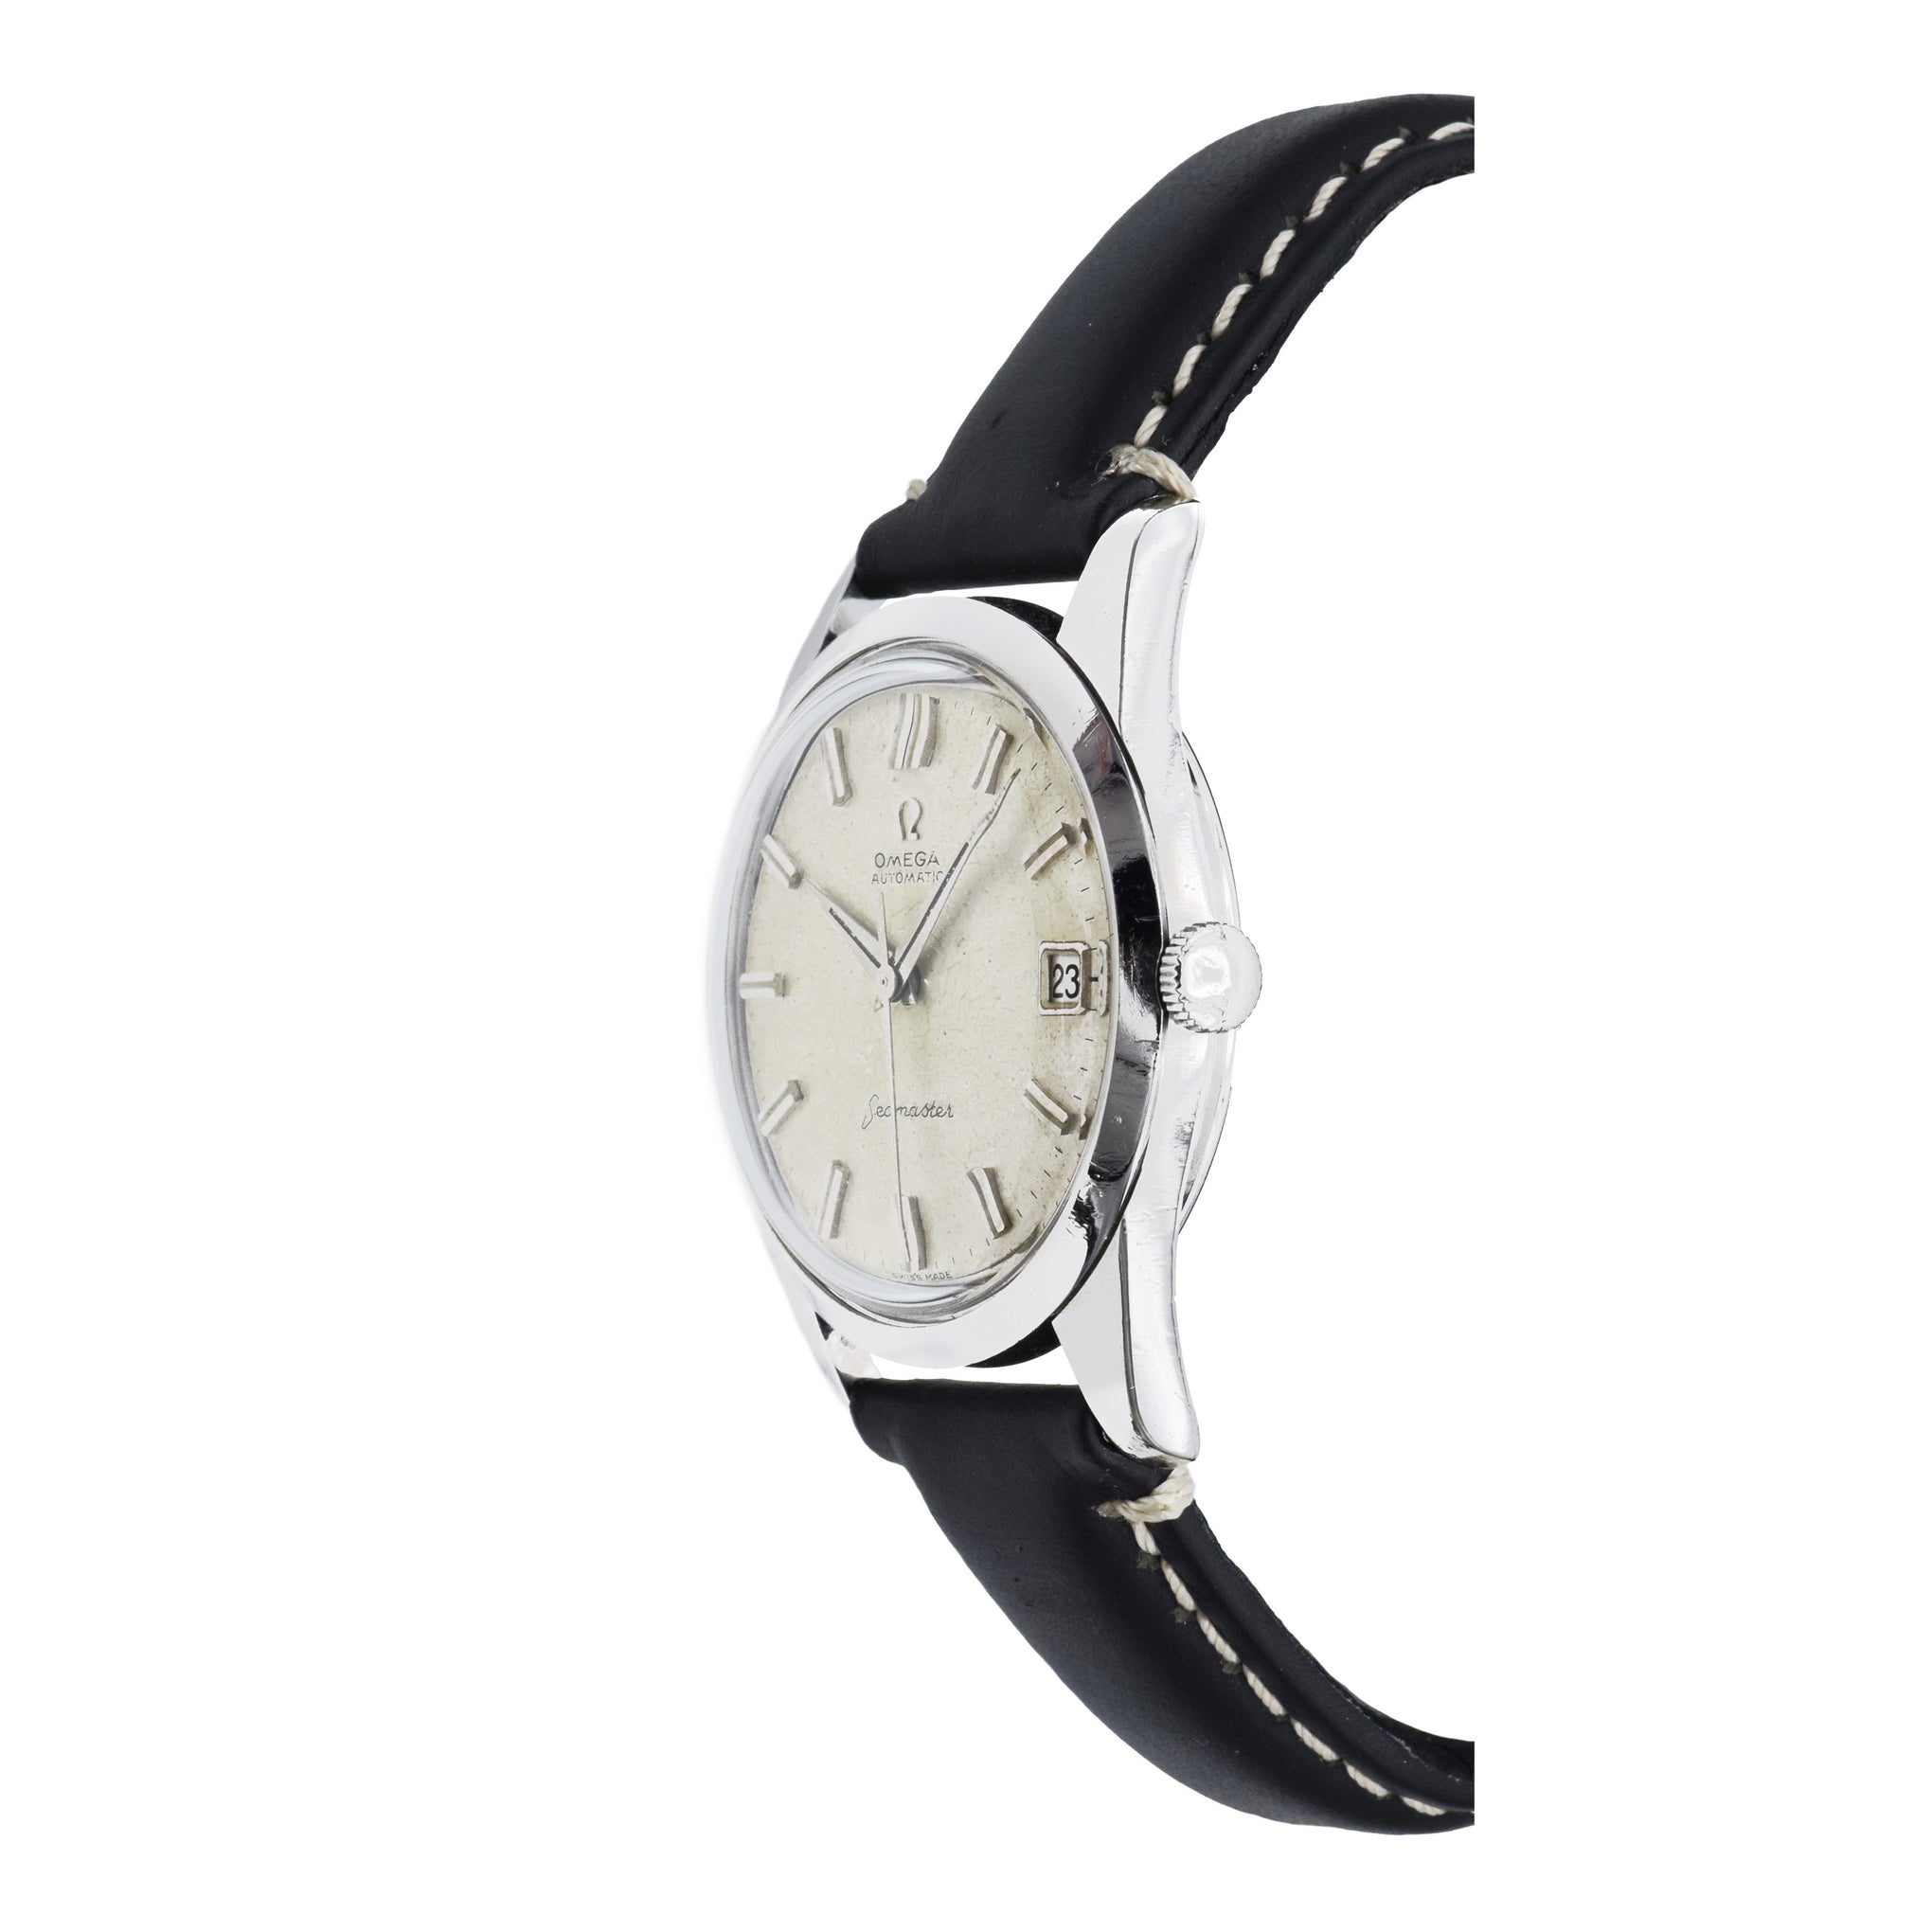 Vintage 1960s Omega Seamaster Watch